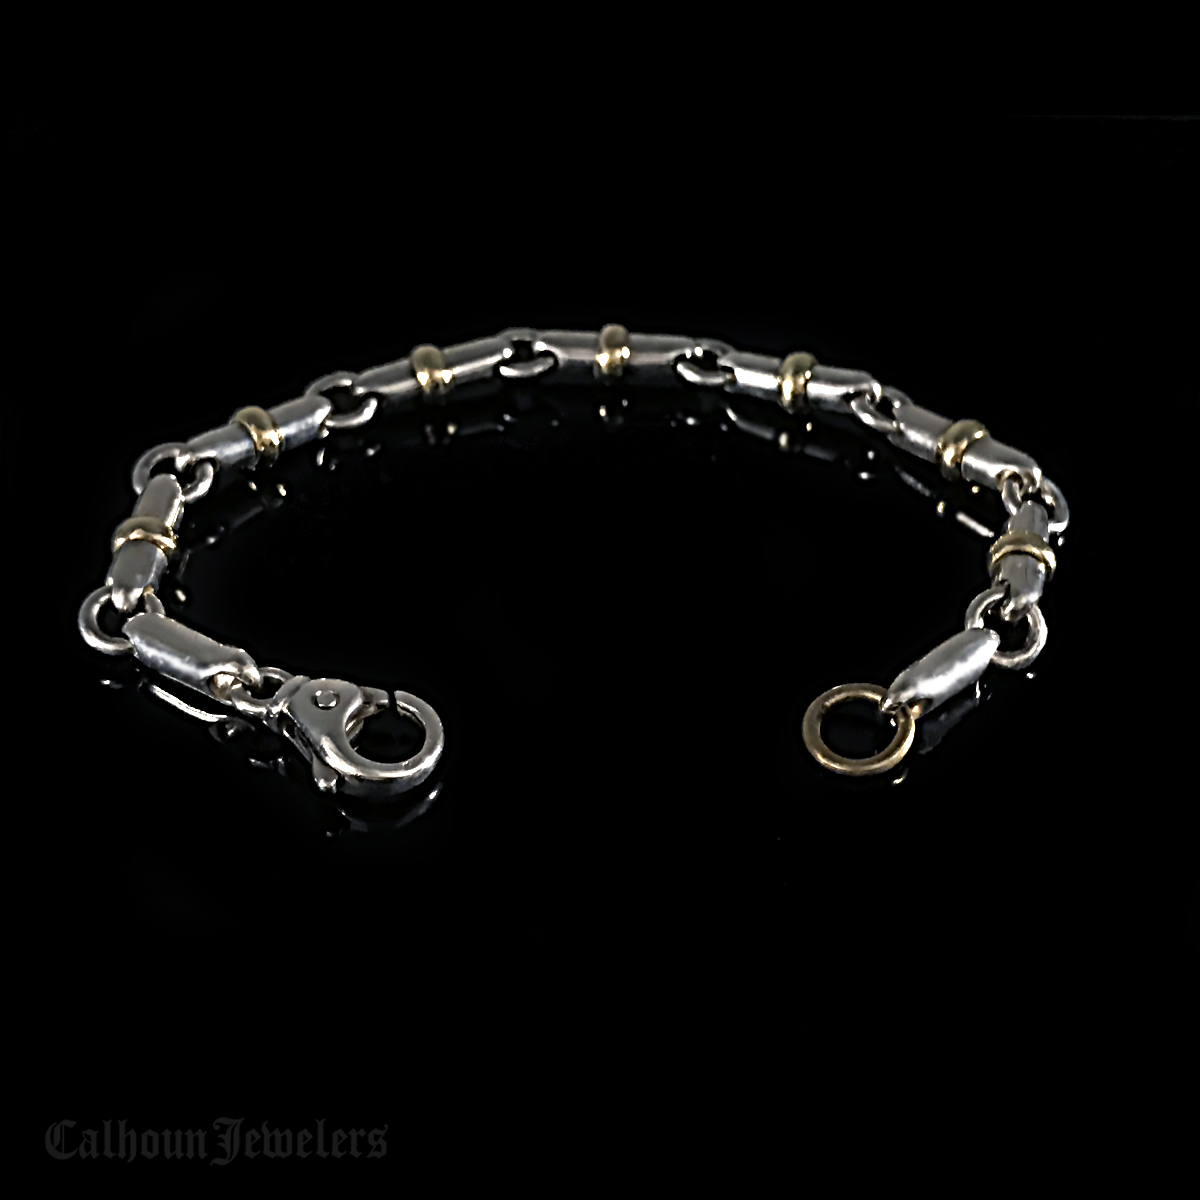 Archive - Calhoun Jewelers